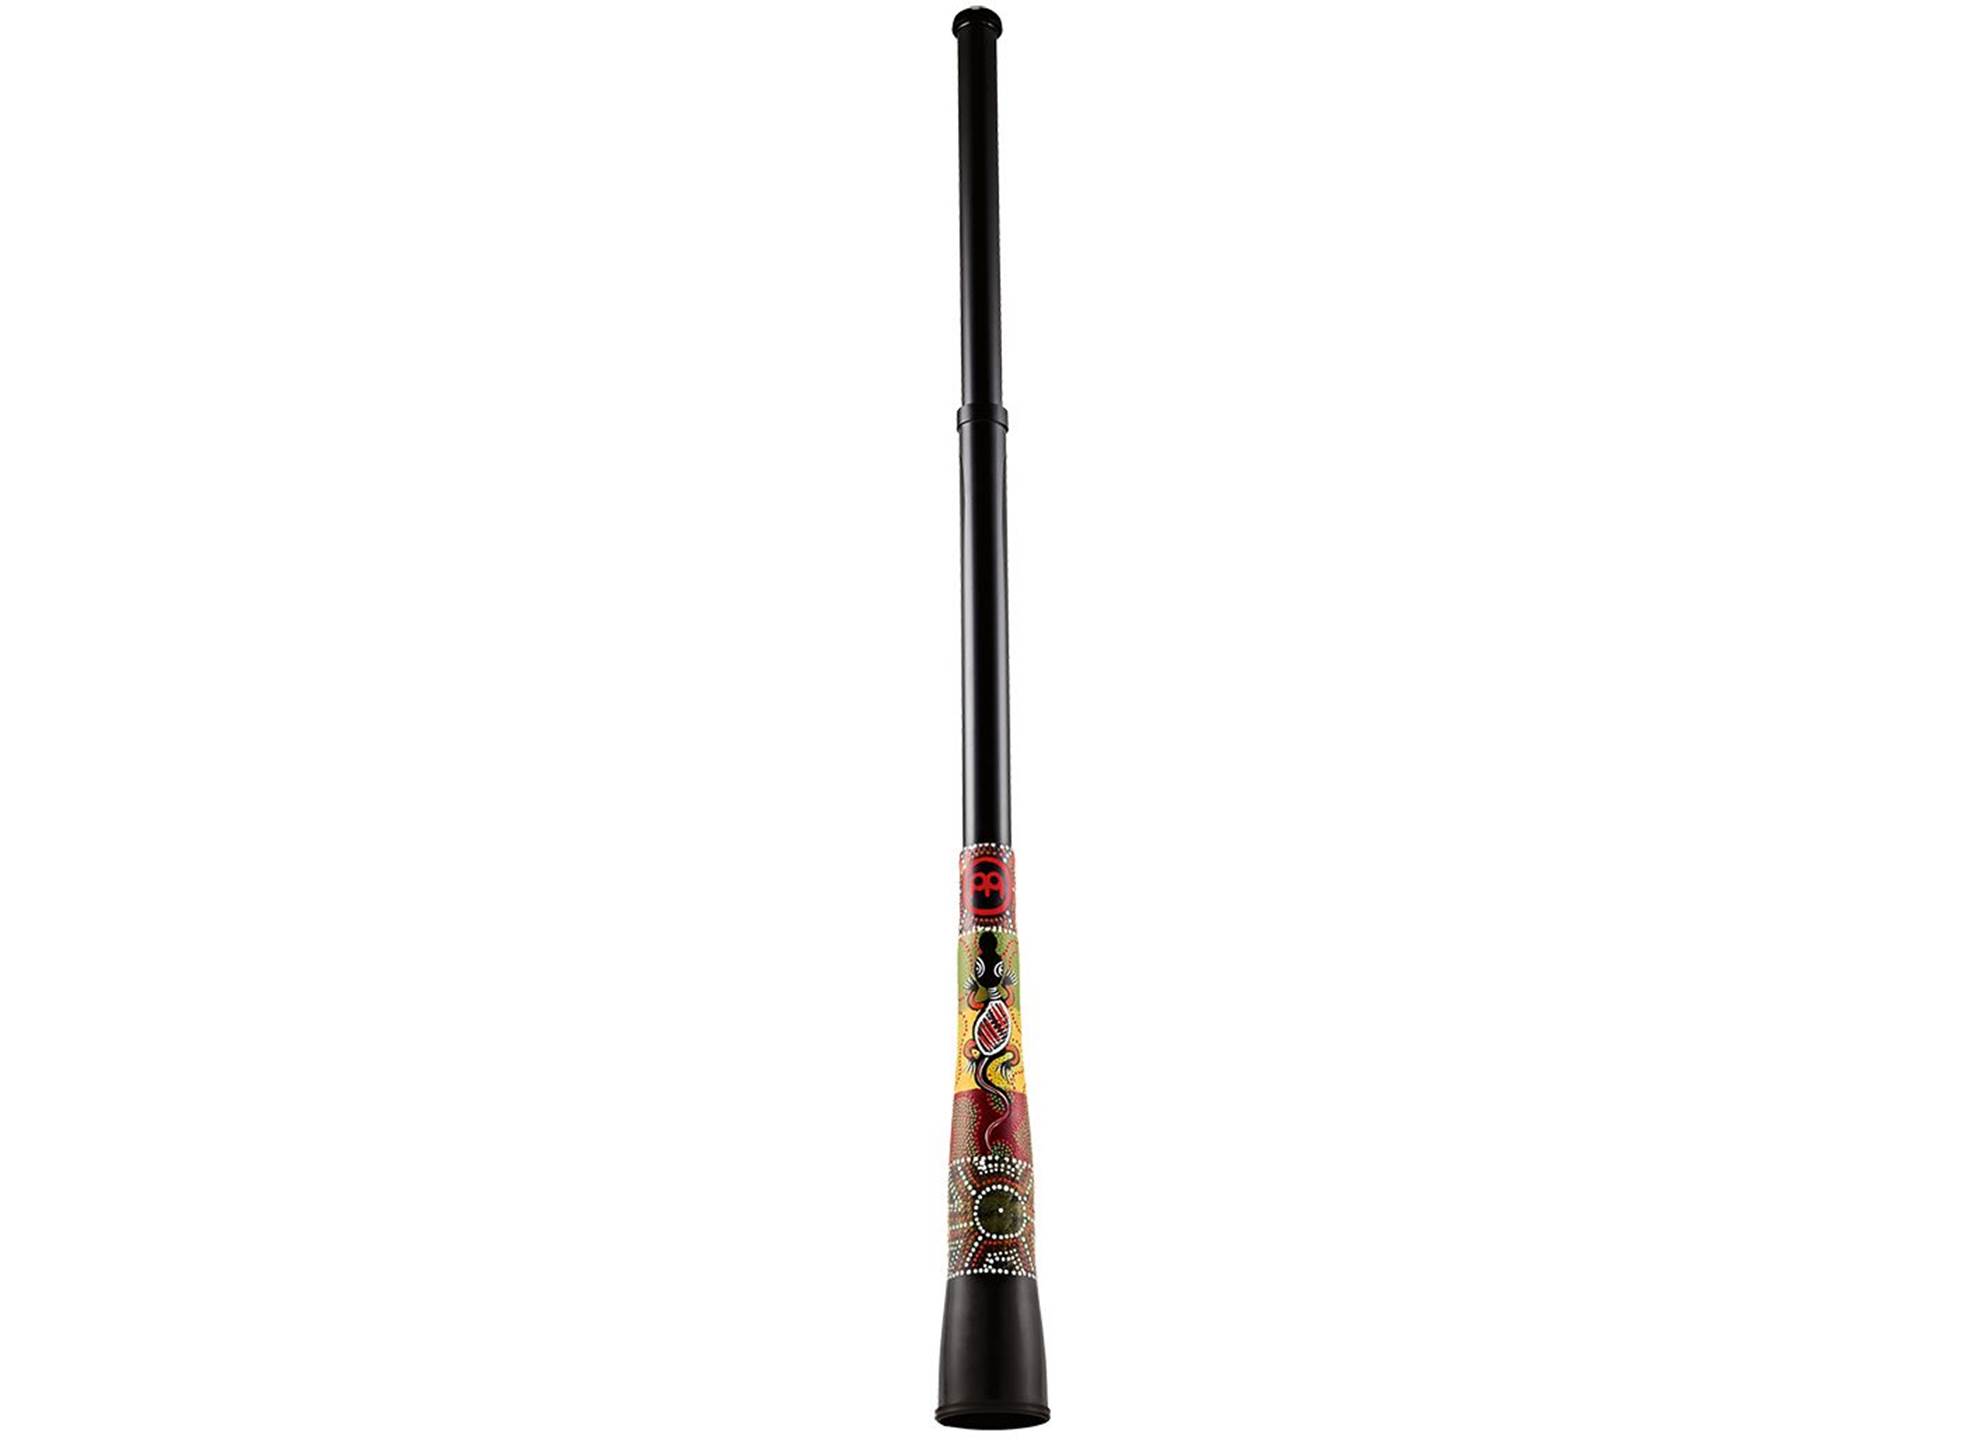 TSDDG2-BK Travel Didgeridoo Black